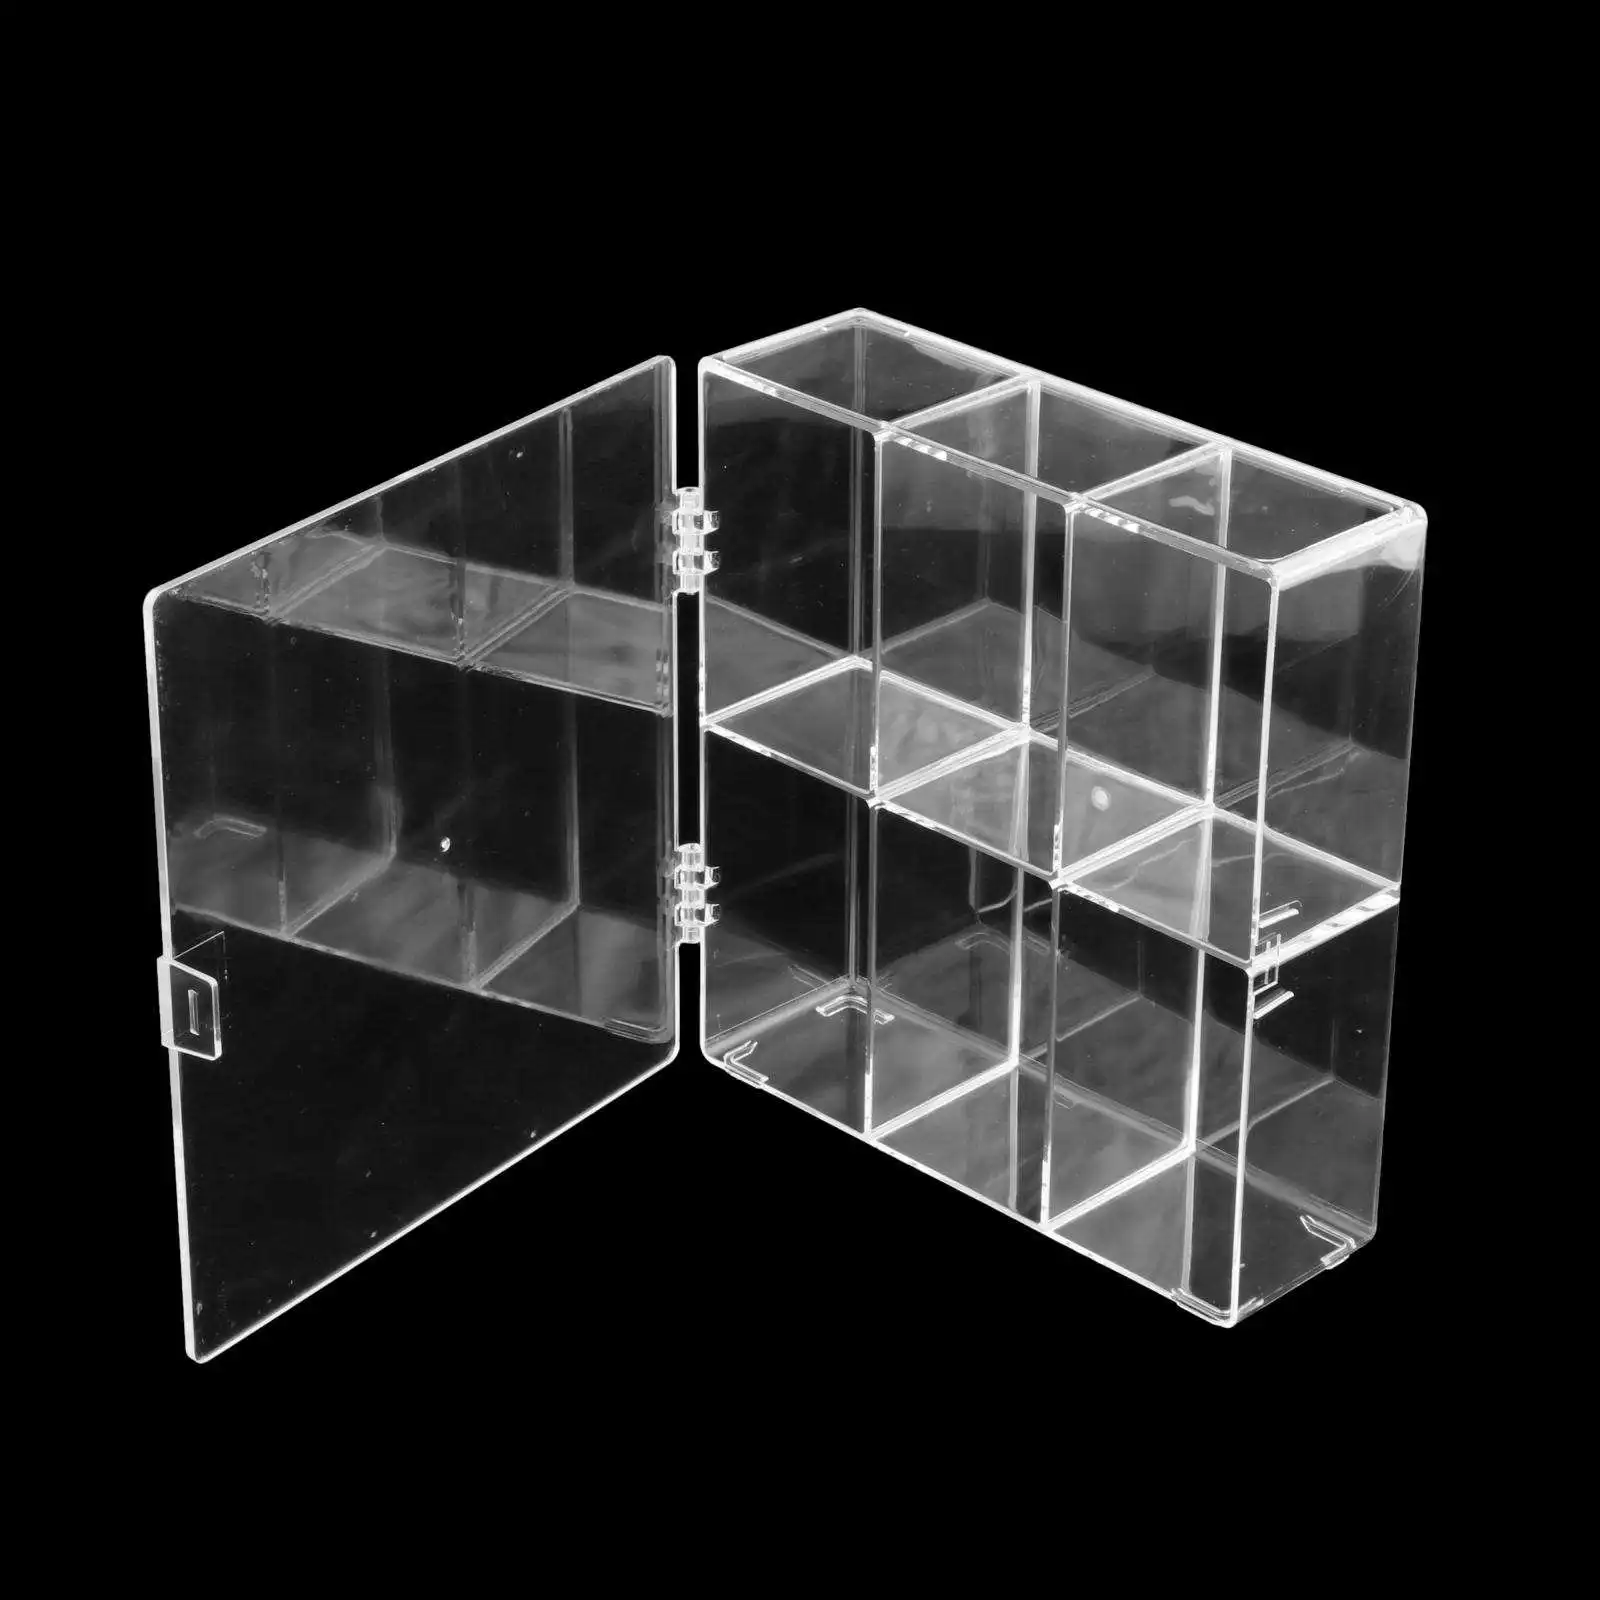 Acrylic Display Rack 6 Shelves Multi-Layer Protection Storage Box for Gift